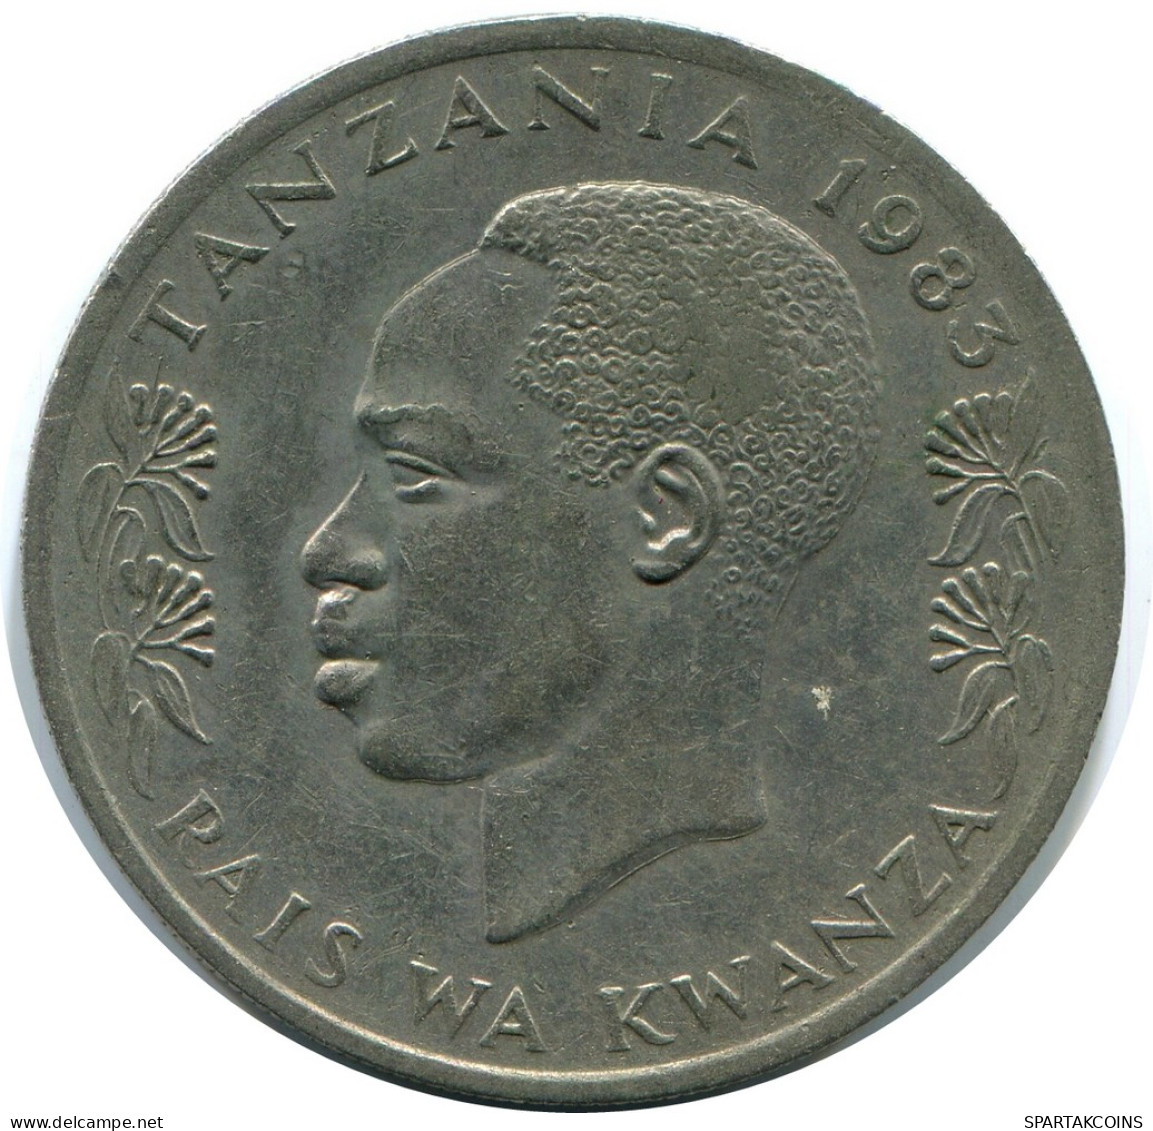 1 SHILINGI 1983 TANZANIA Coin #AZ090.U - Tanzanie